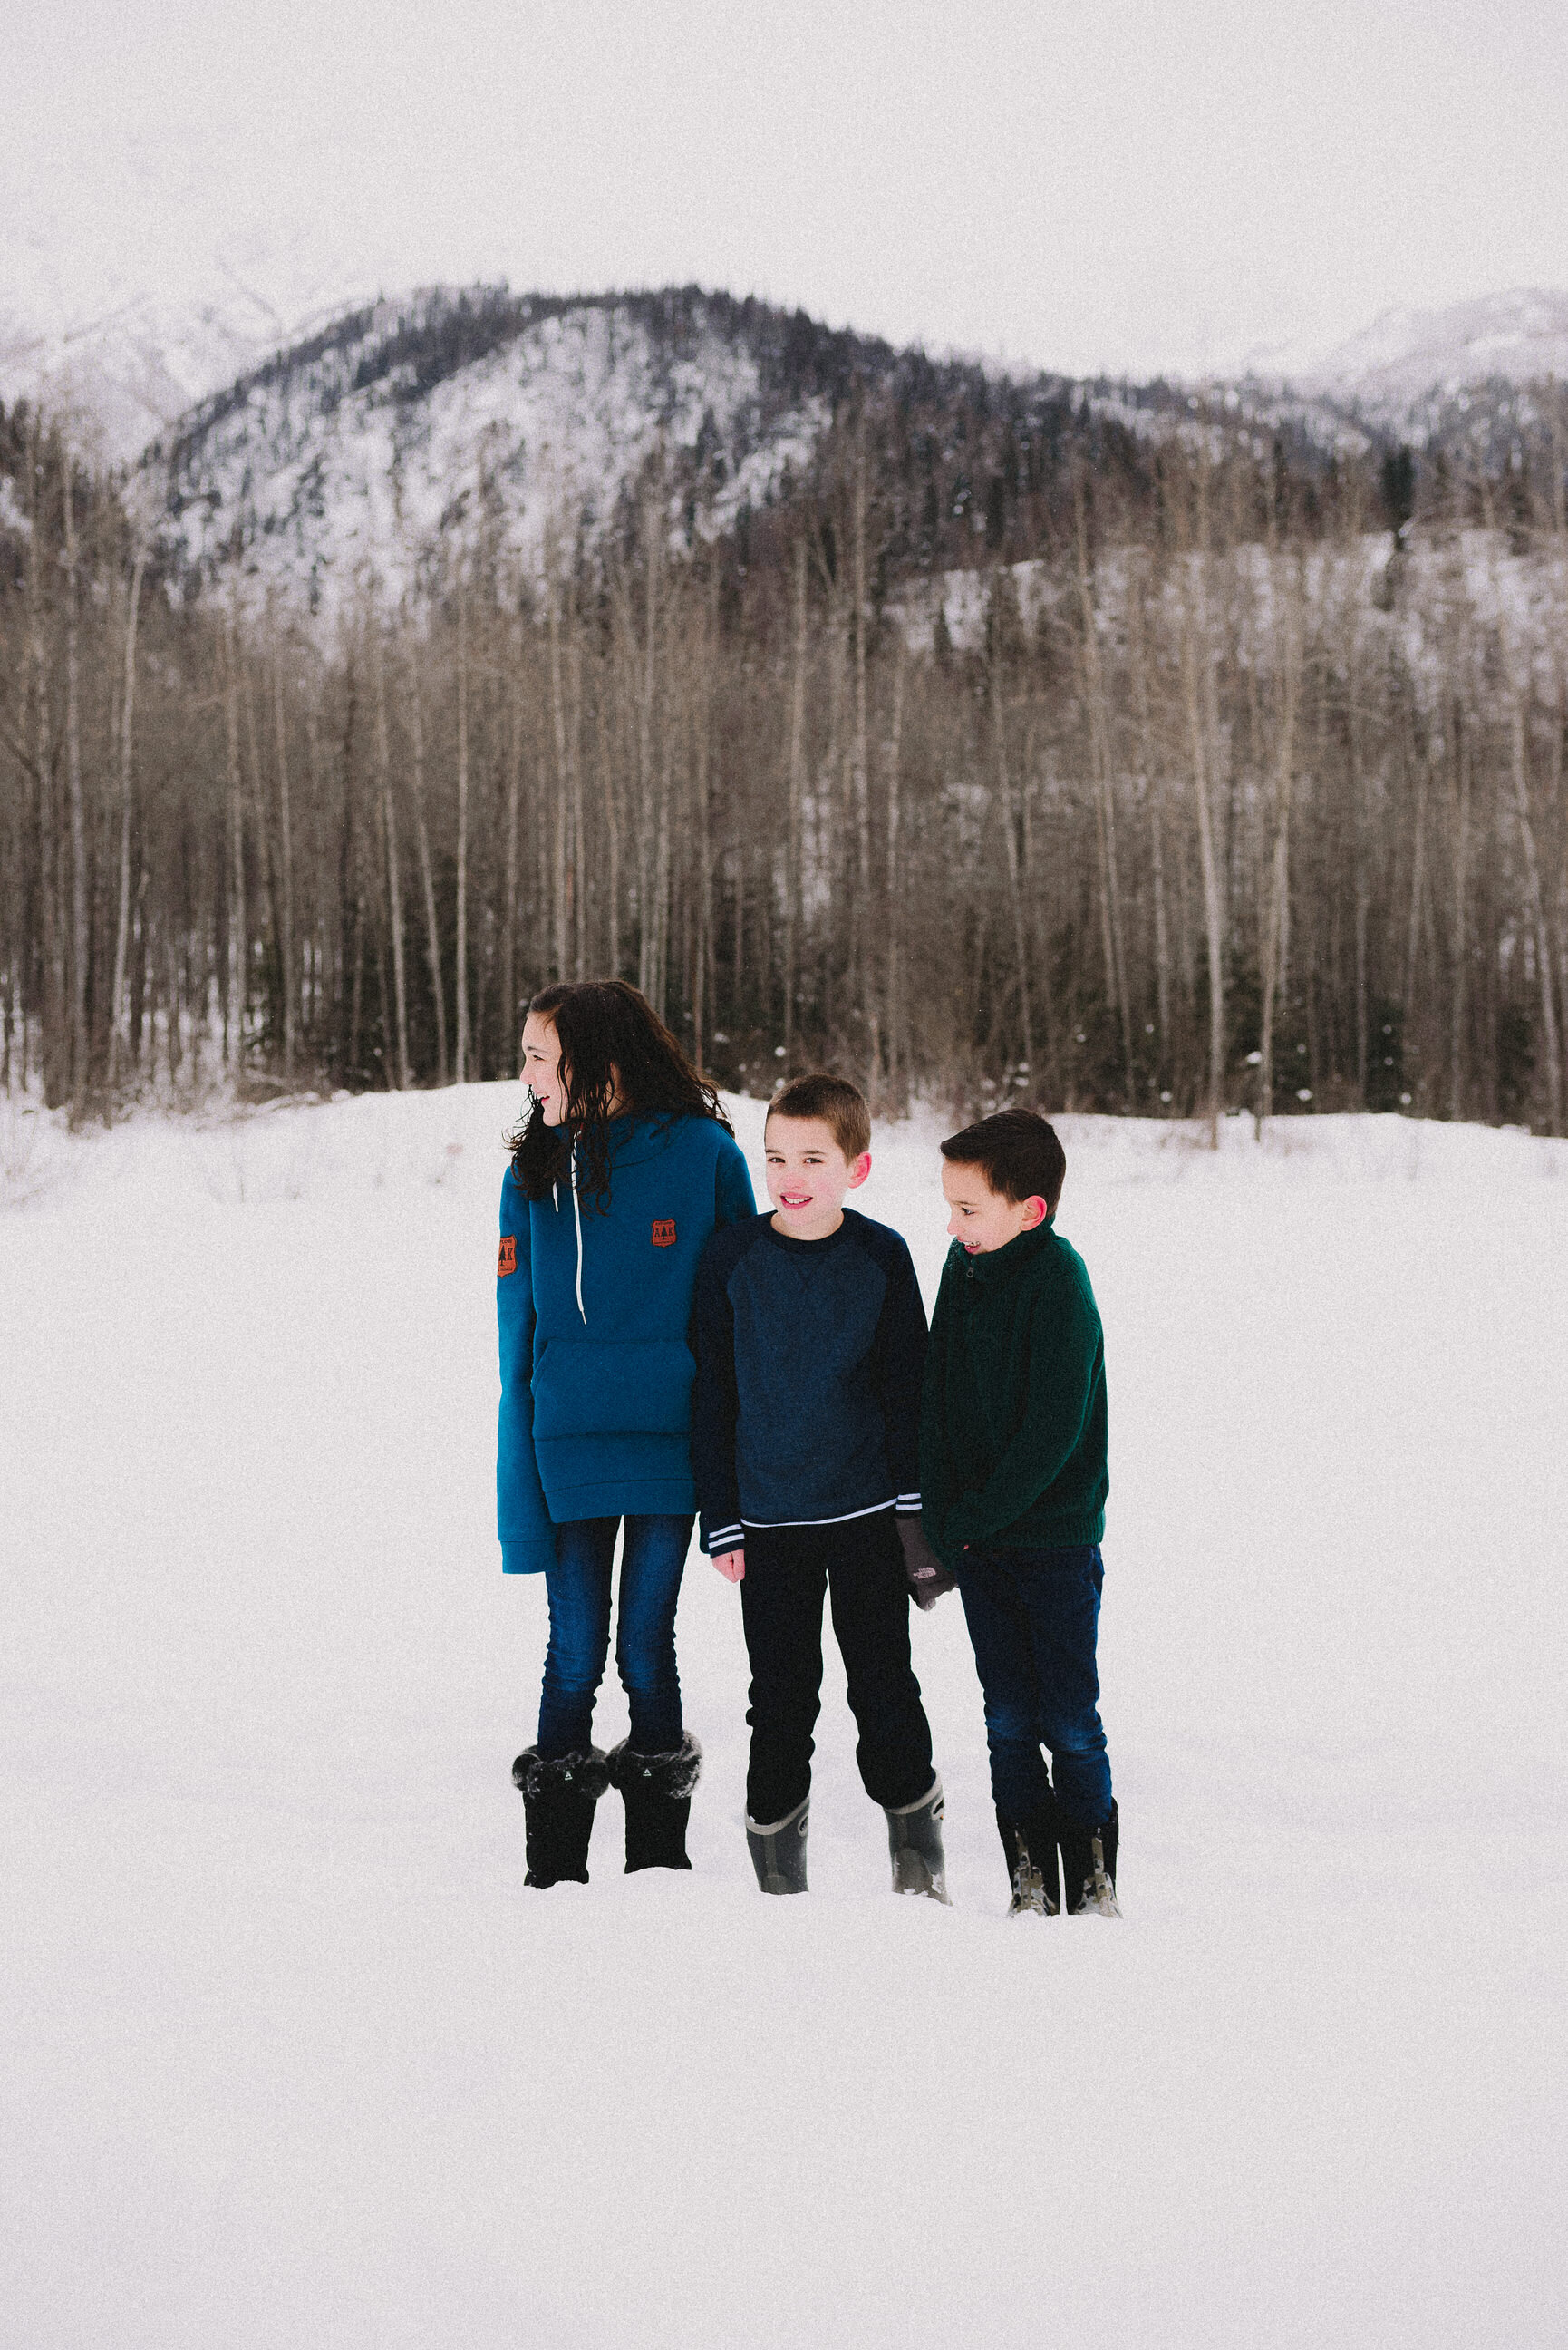 eklutna-tailrace-winter-family-session-palmer-alaska-photographer-way-up-north-photography (148).jpg